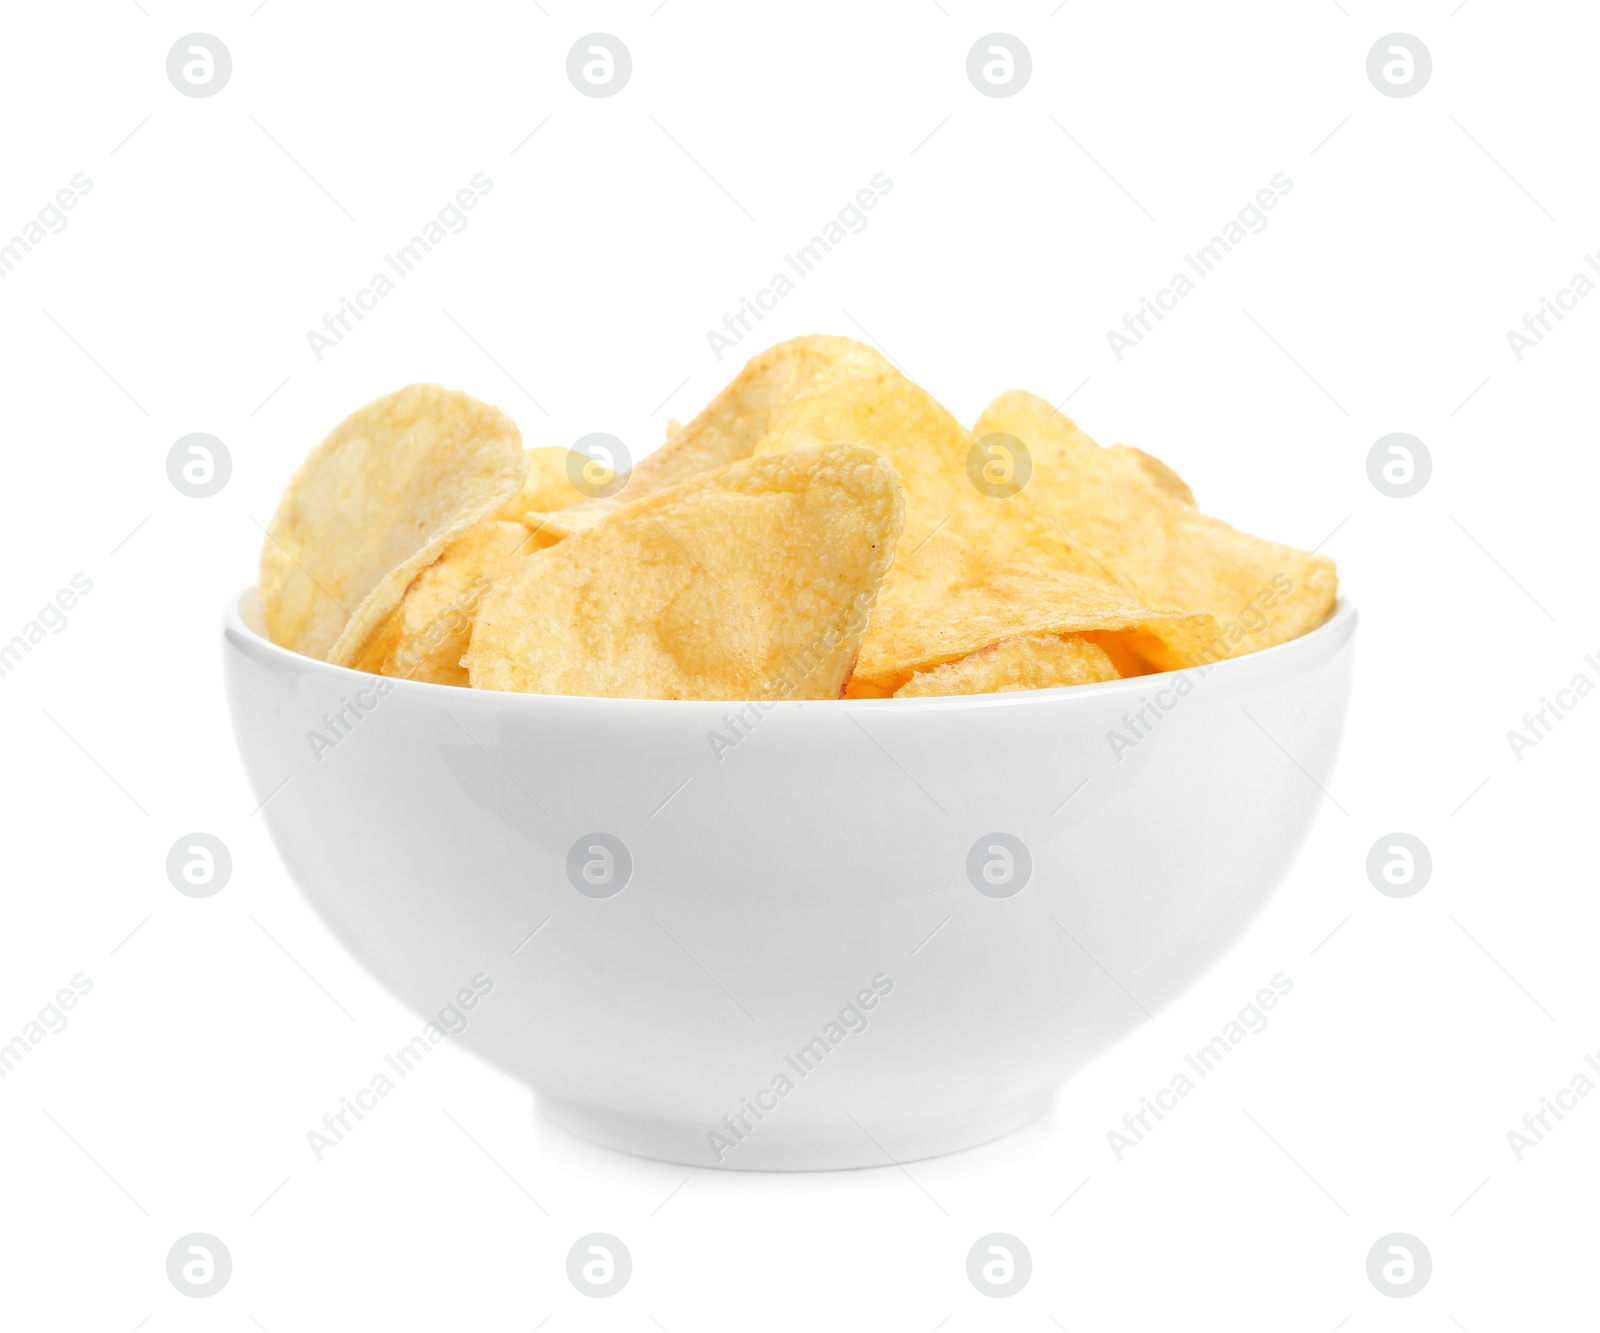 Photo of Bowl of tasty crispy potato chips on white background